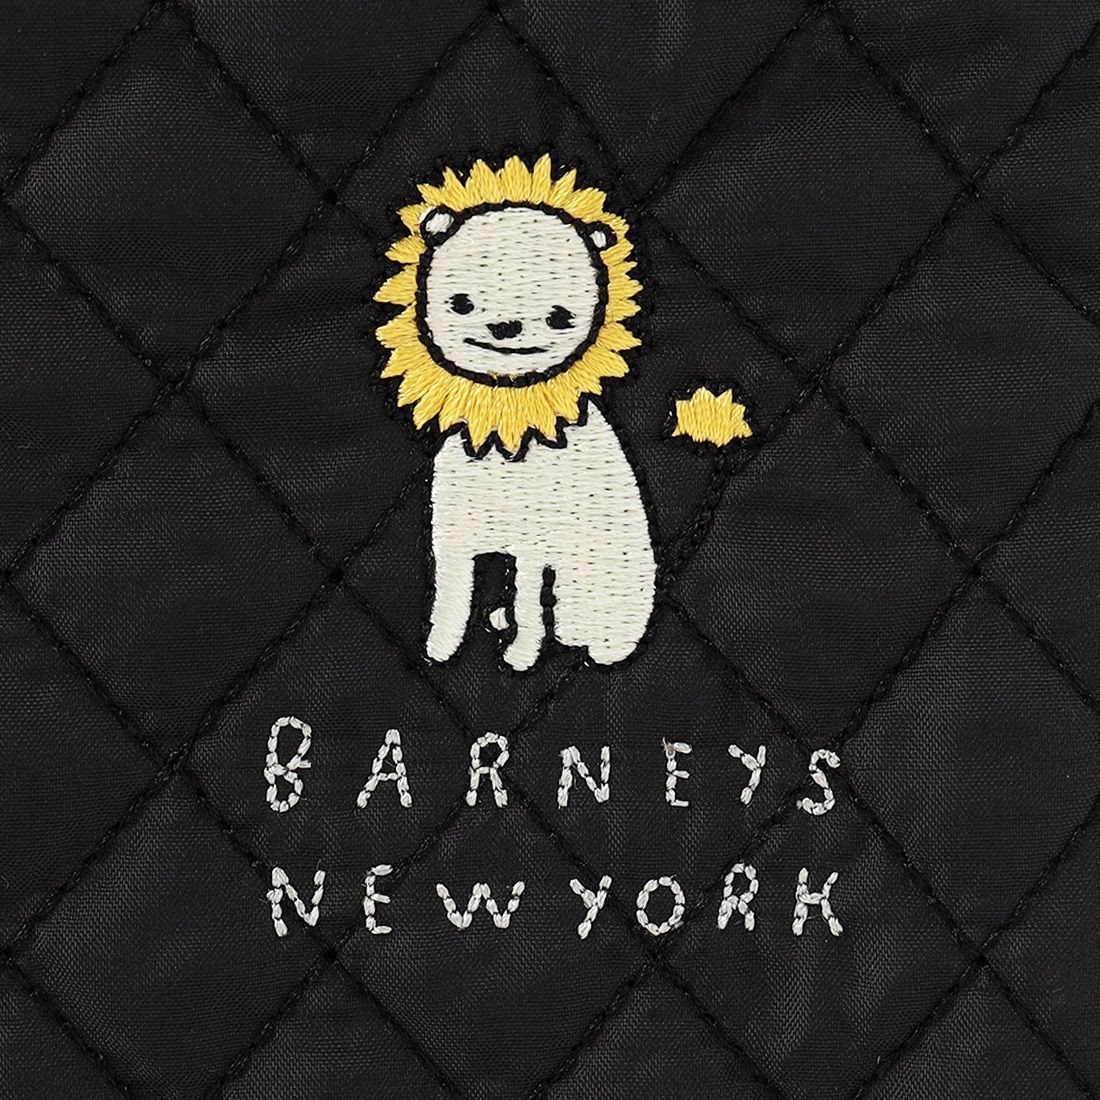 BARNEYS NEW YORK（バーニーズ ニューヨーク）ライオンキルティングポーチ